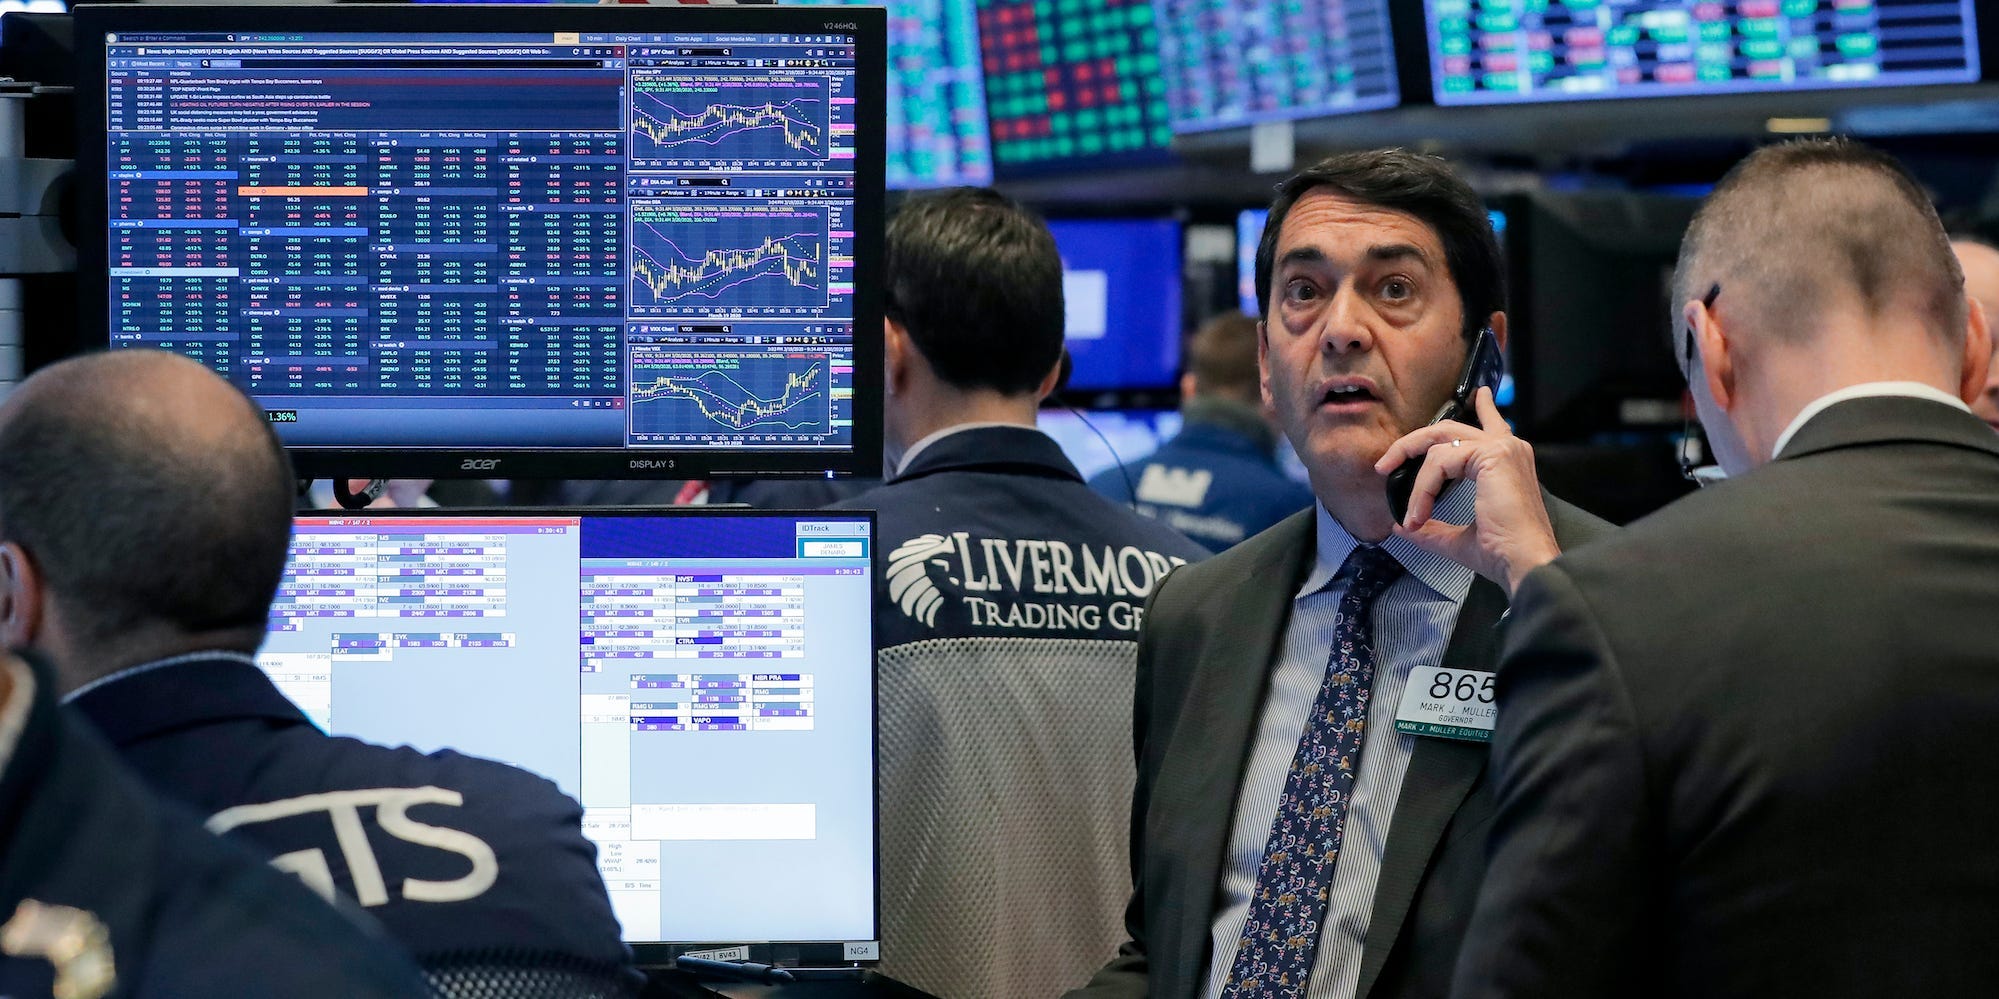 NYSE Trader surprised